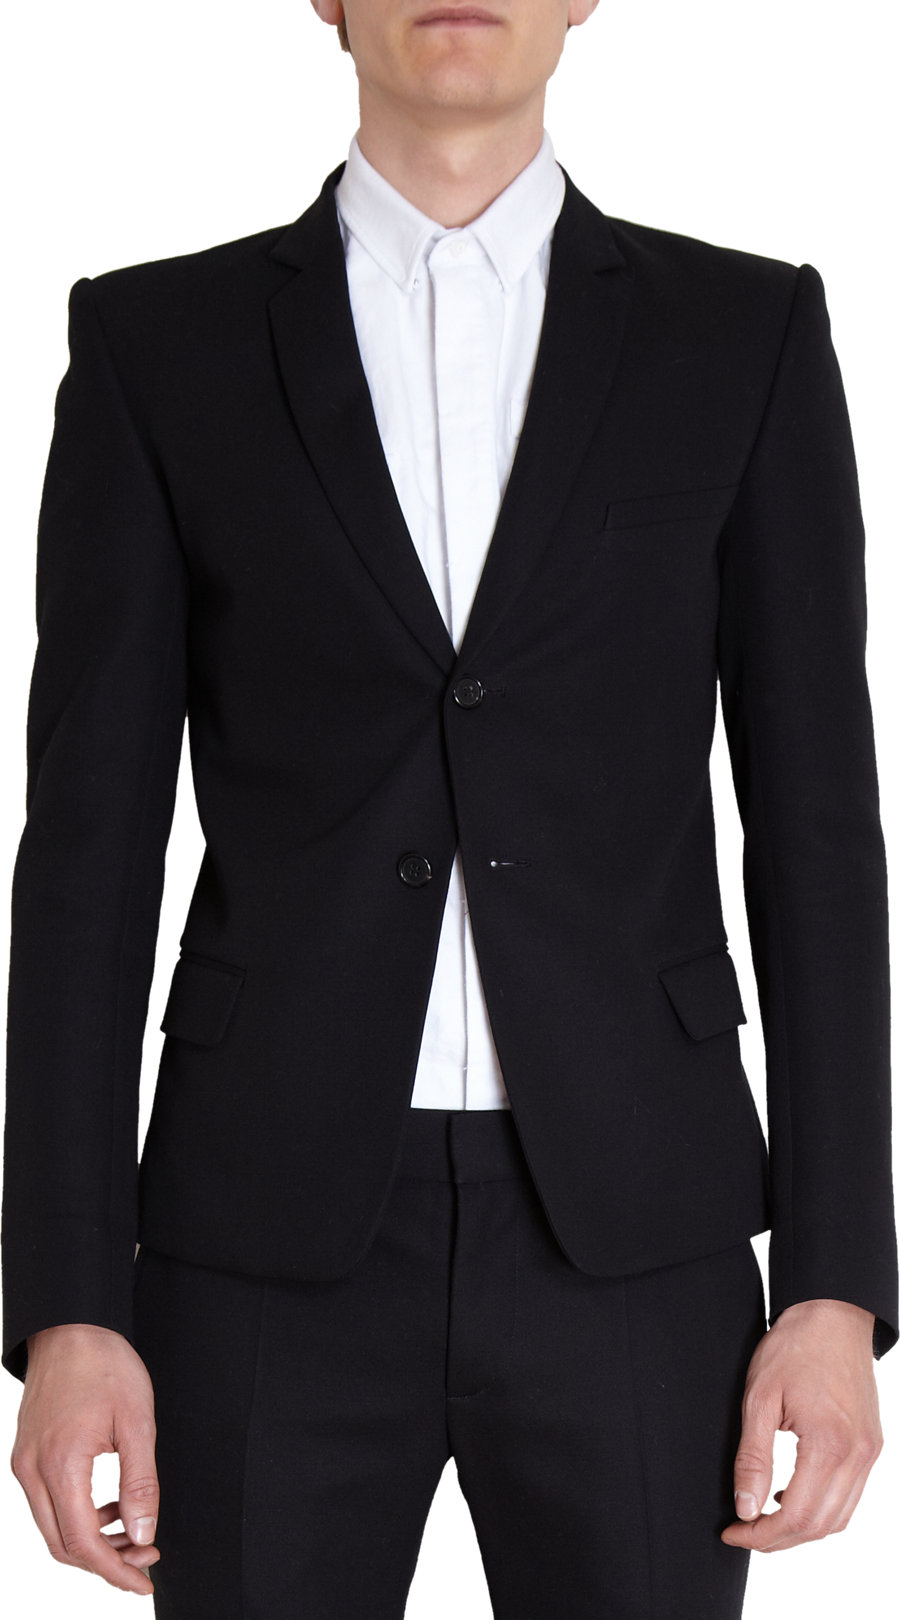 Lyst - Balmain Two Piece Short Suit in Black for Men